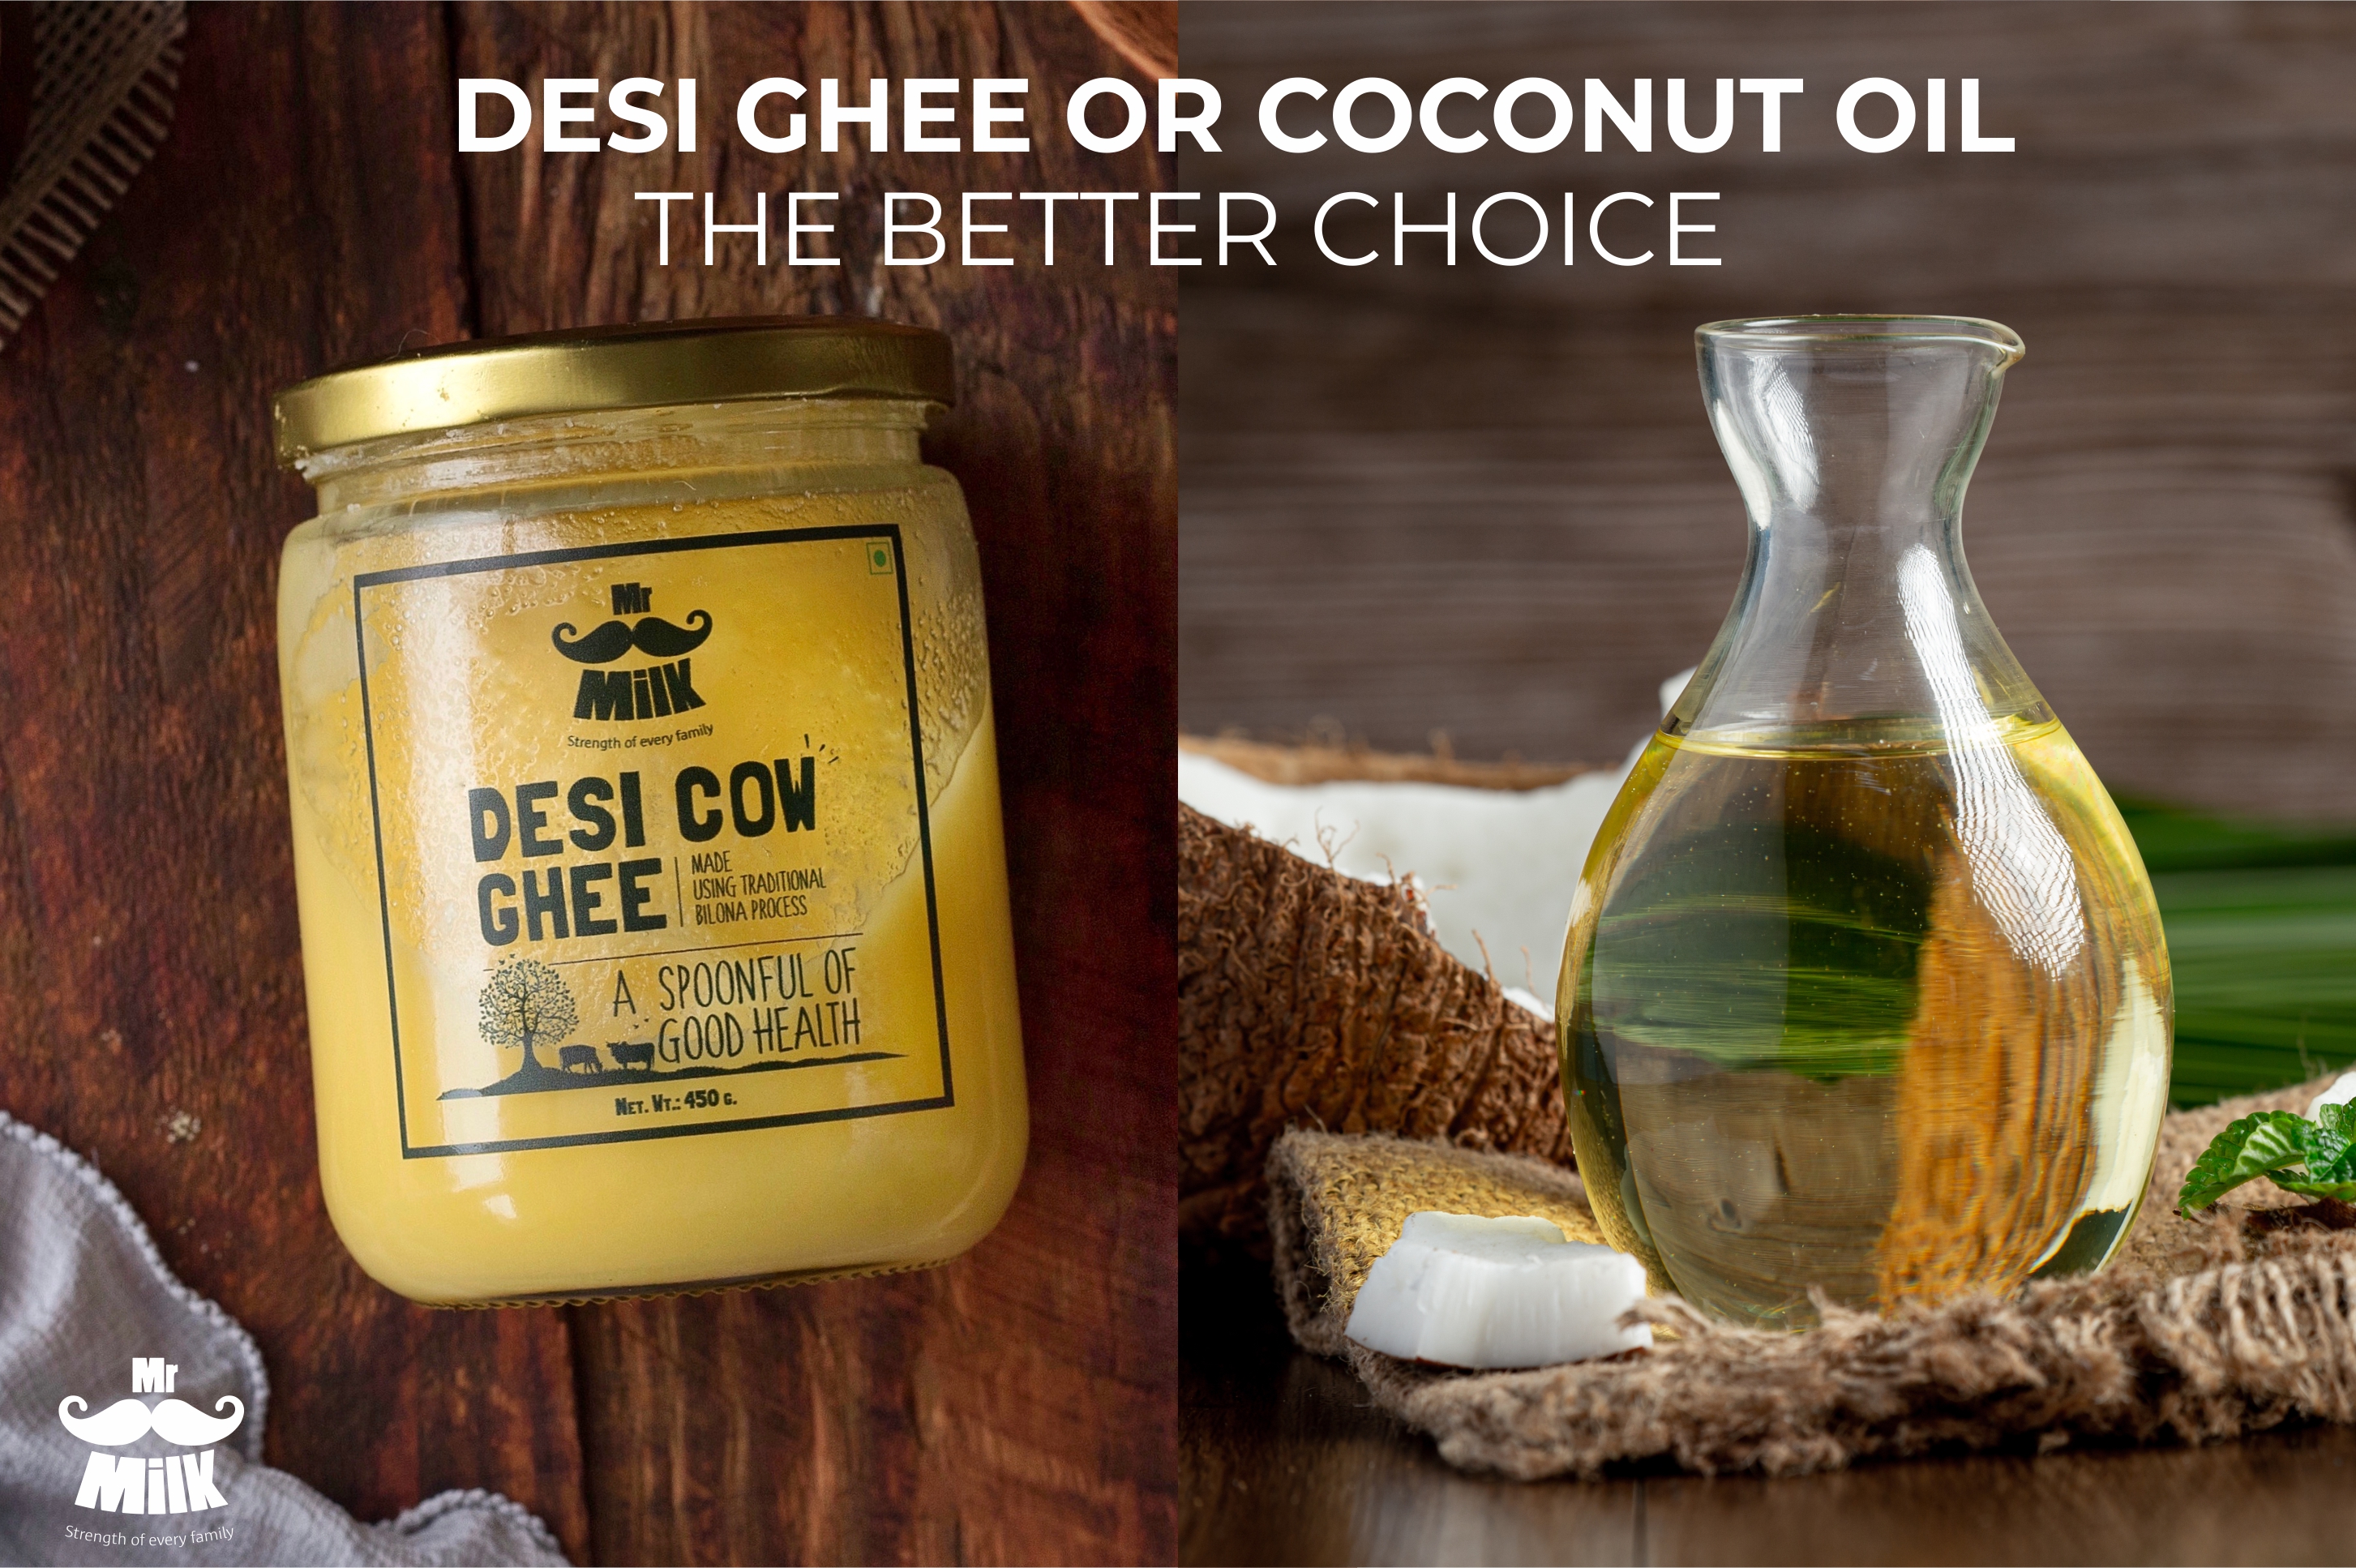 Desi Ghee or Coconut Oil – The Better Choice